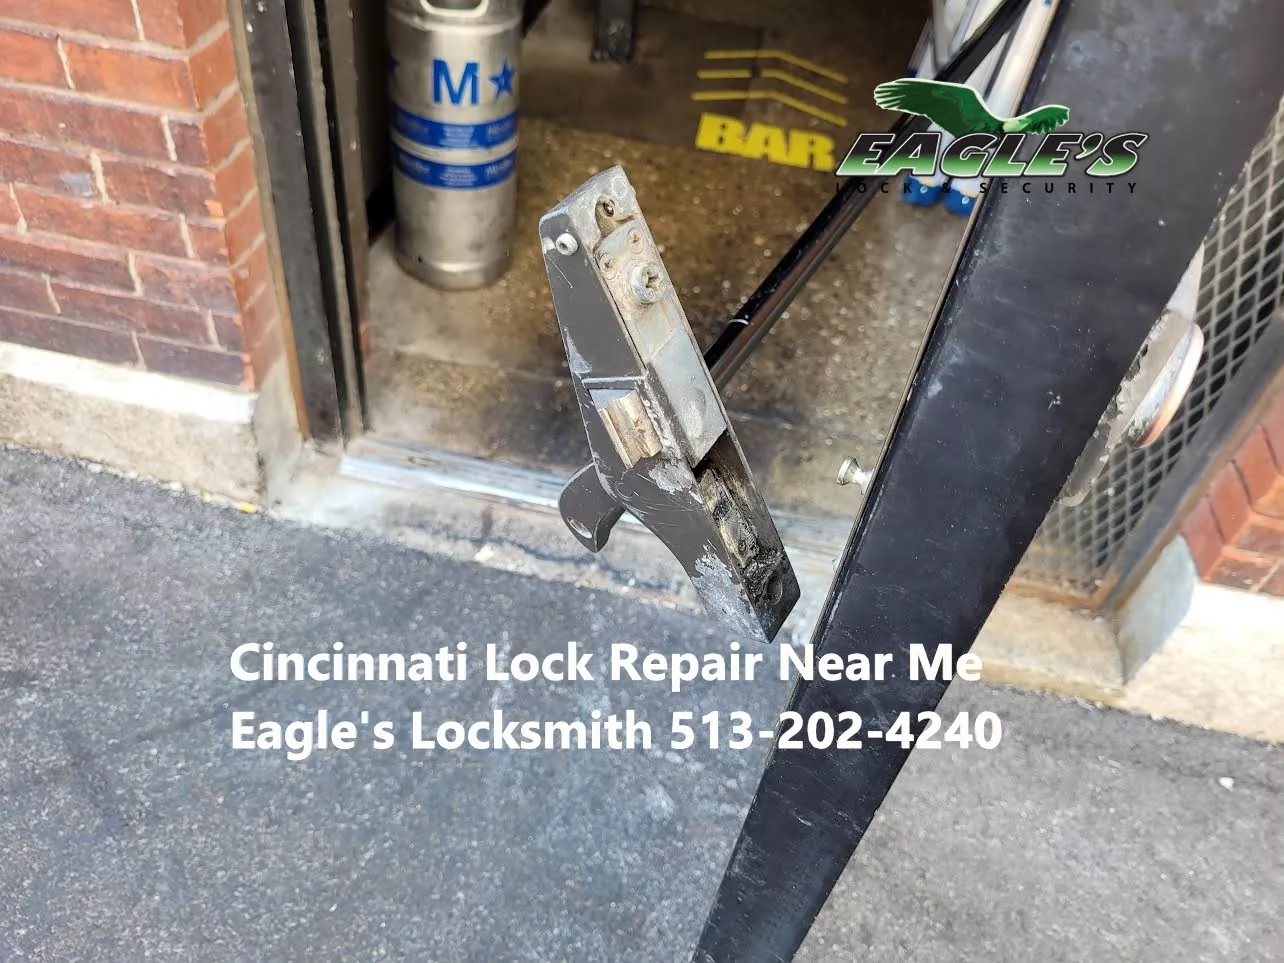 Cincinnati Lock Repair Near Me